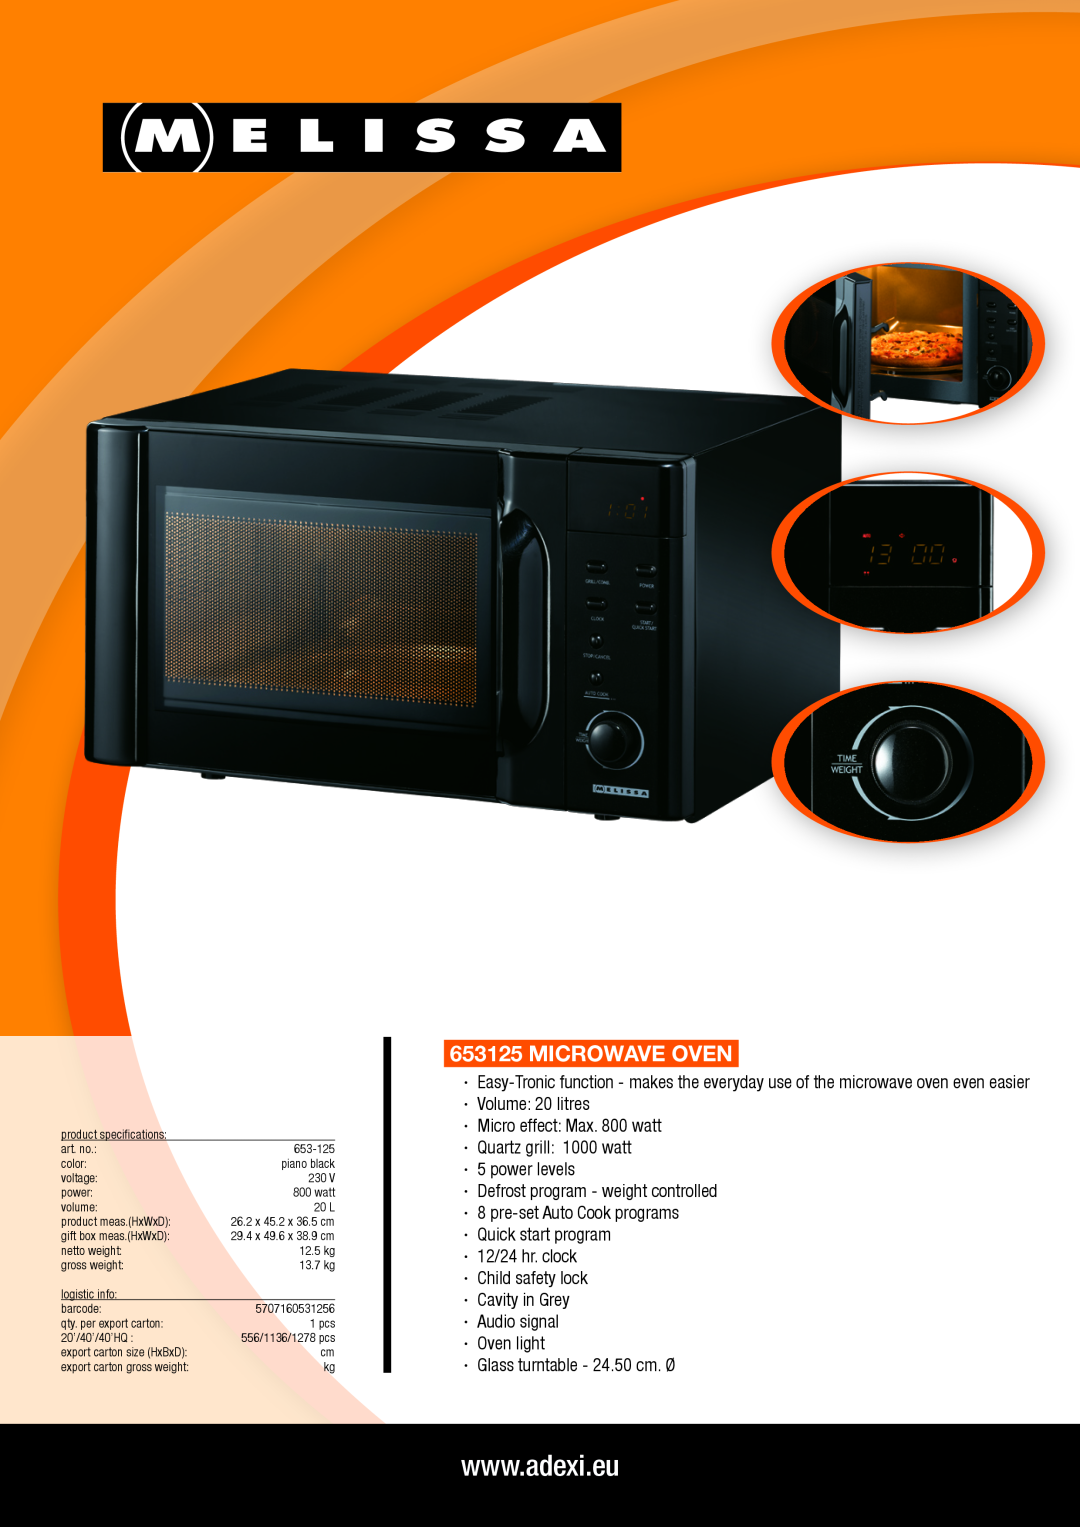 Melissa 653125 quick start Microwave oven, ·· Micro effect Max. 800 watt, ·· Quartz grill 1000 watt ·· 5 power levels 